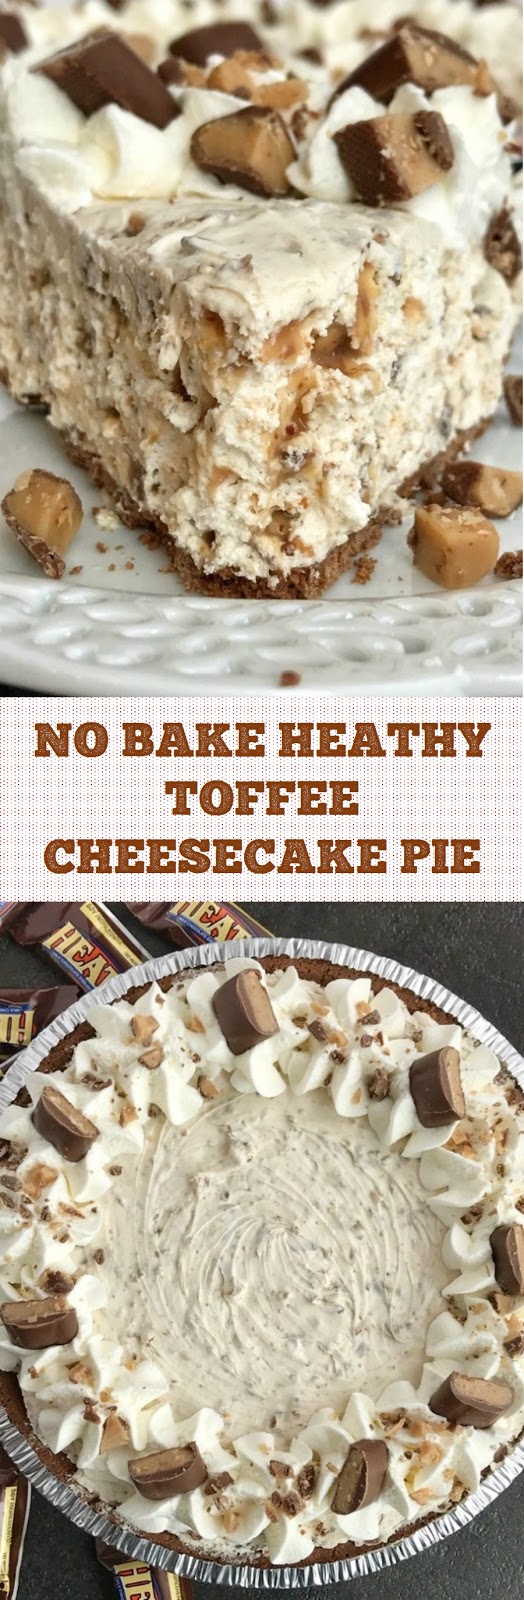 No Bake Heathy Toffee Cheesecake Pie